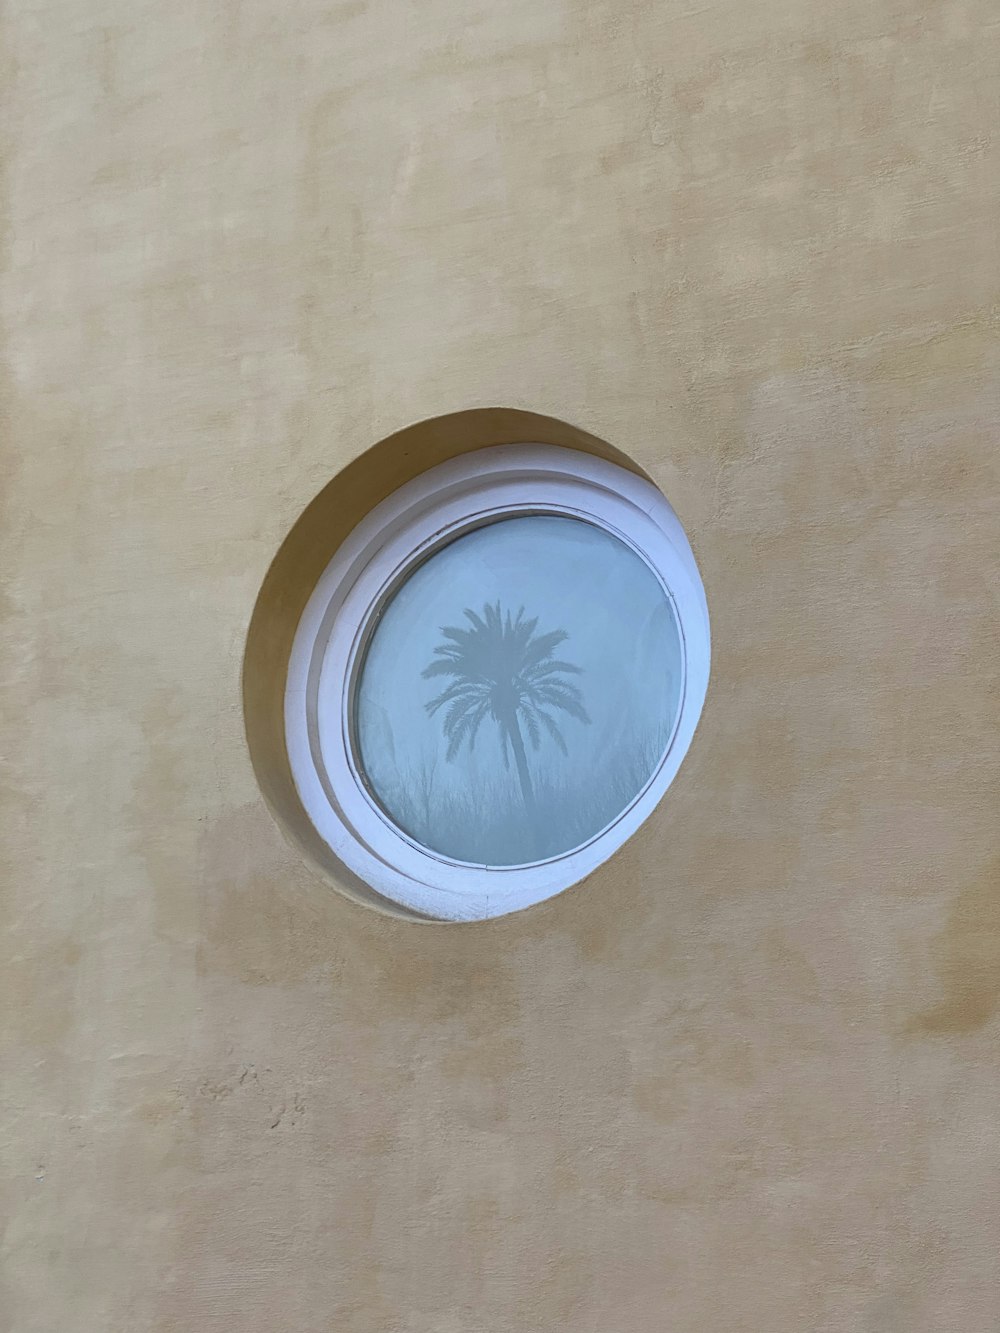 a round window with a palm tree drawn on it